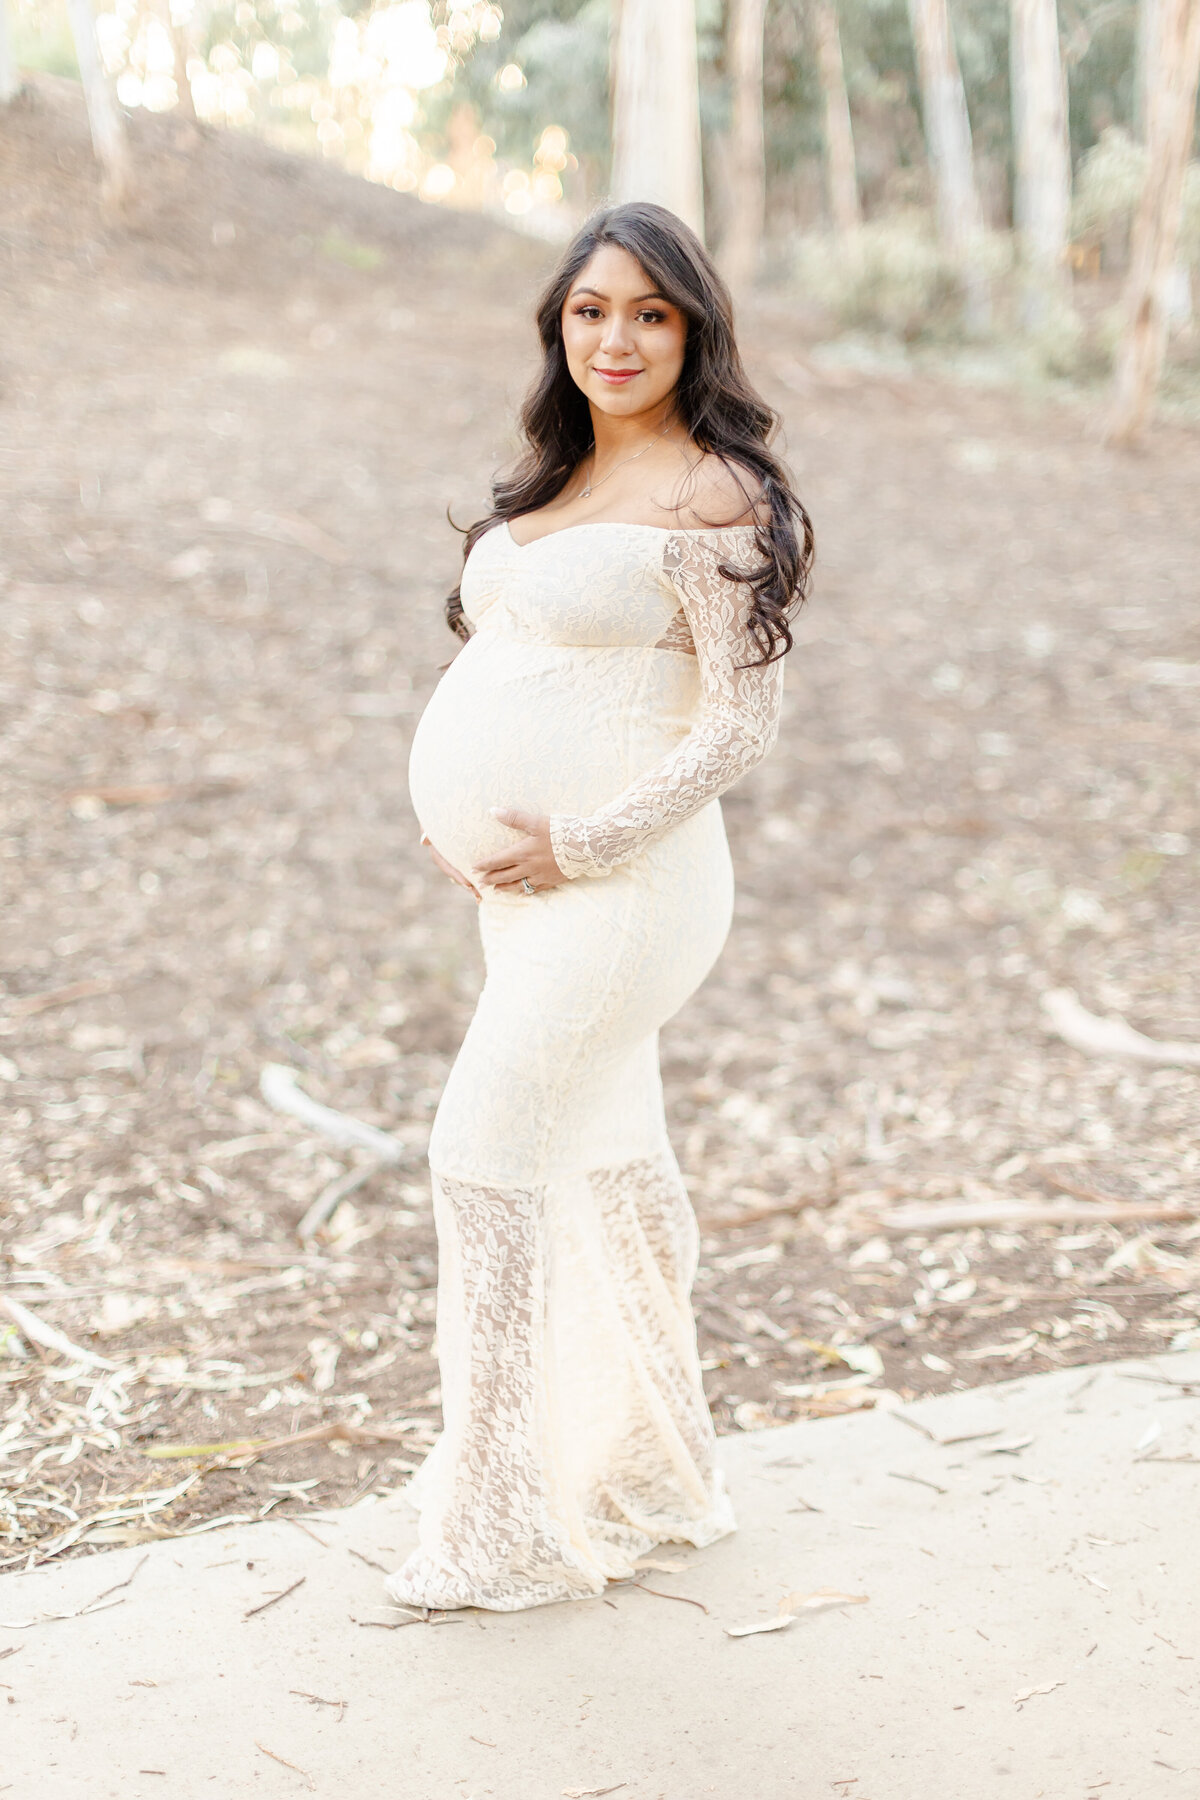 Professional Maternity photographer in Orange County, CA